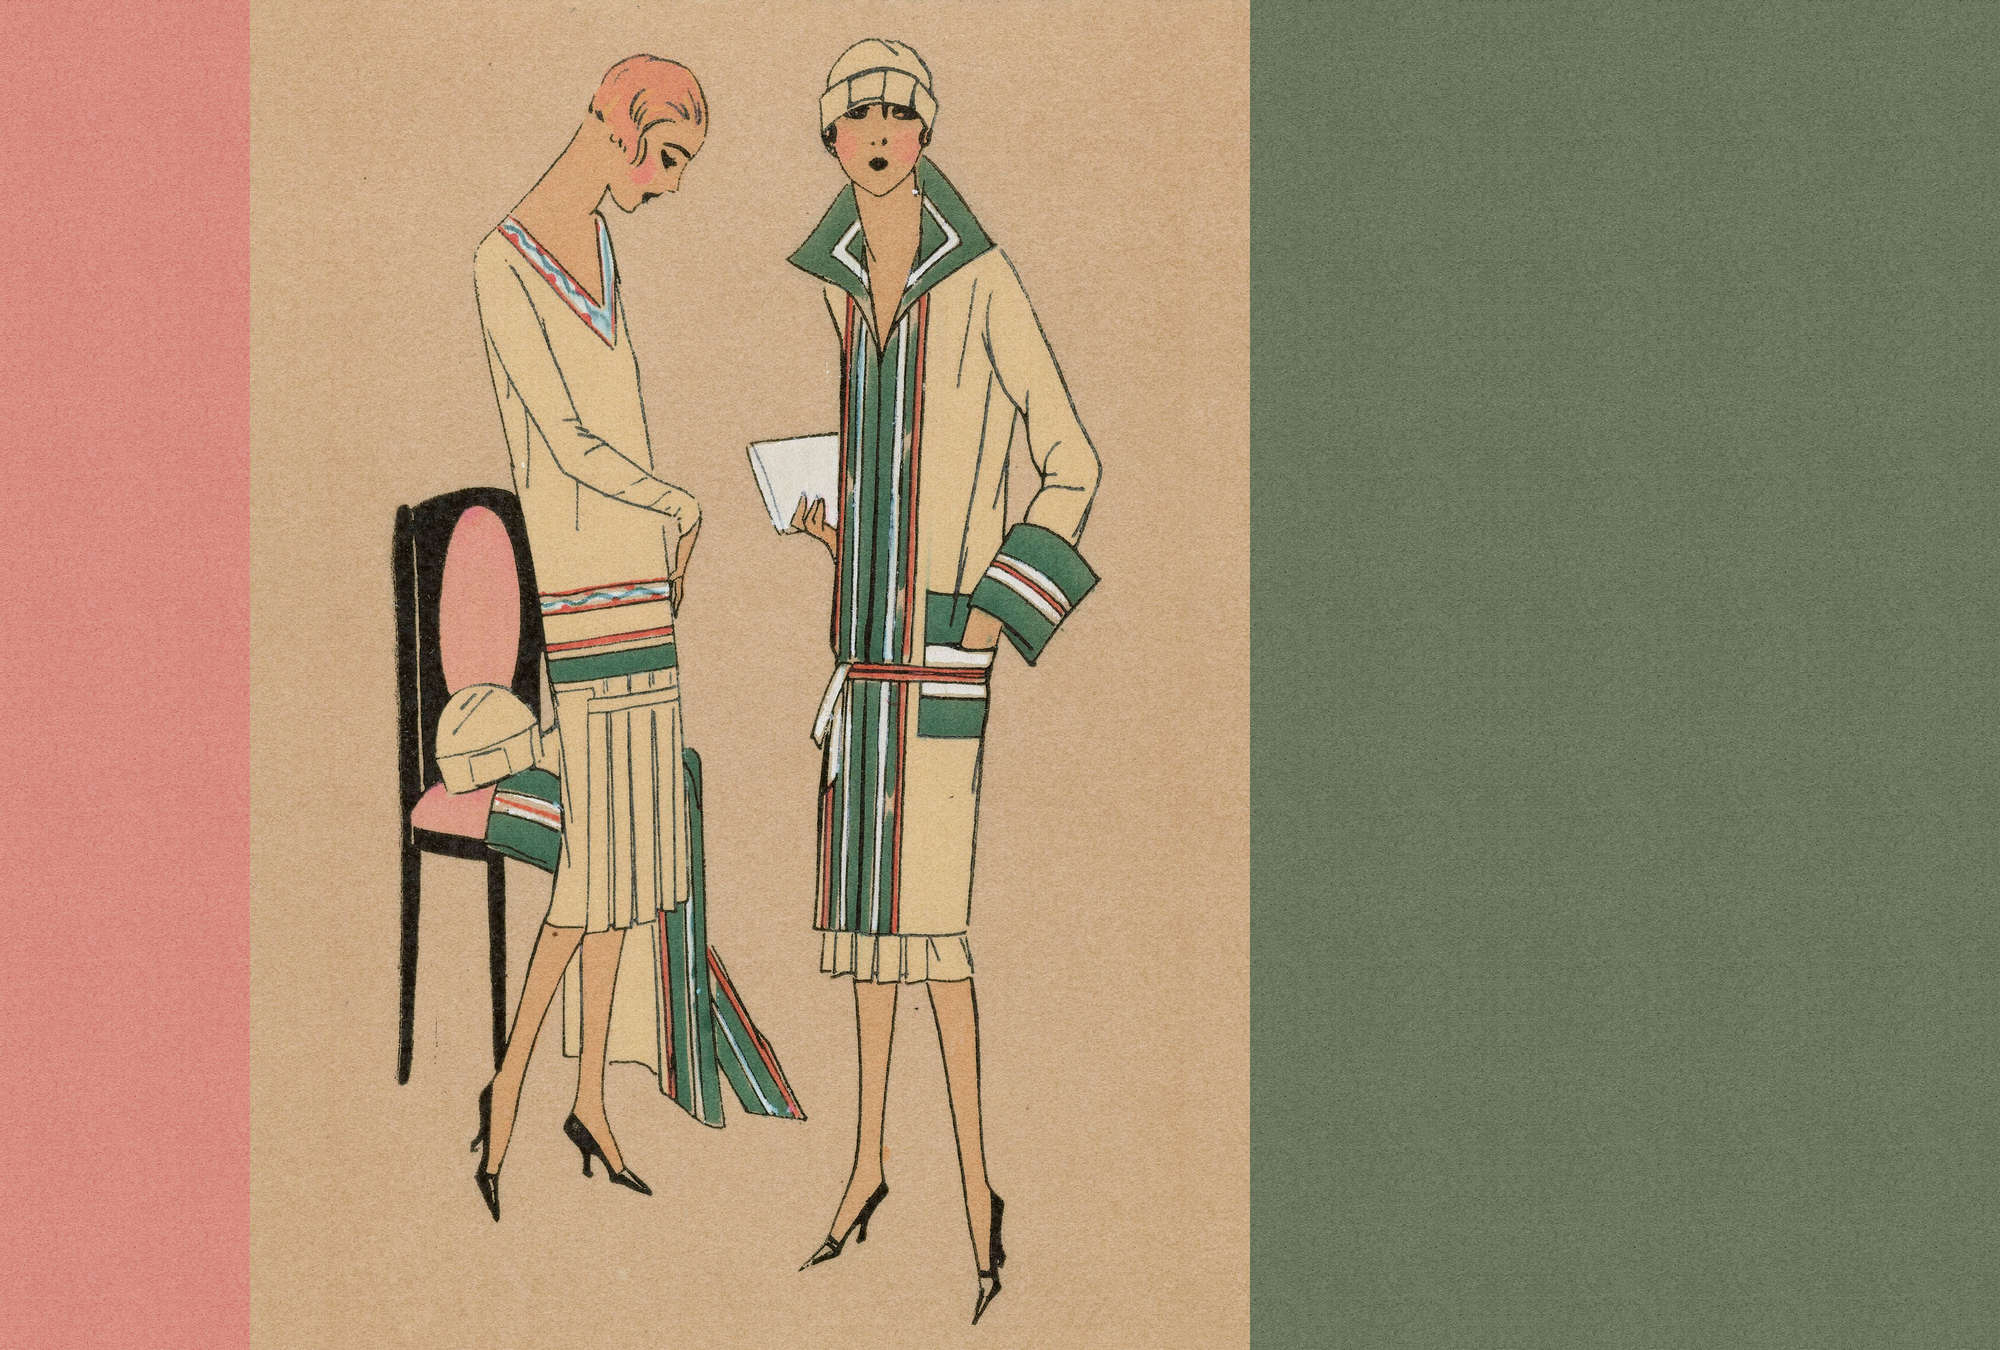             Parisienne 1 - fotobehang kunstdruk kleding Twentiers Style
        